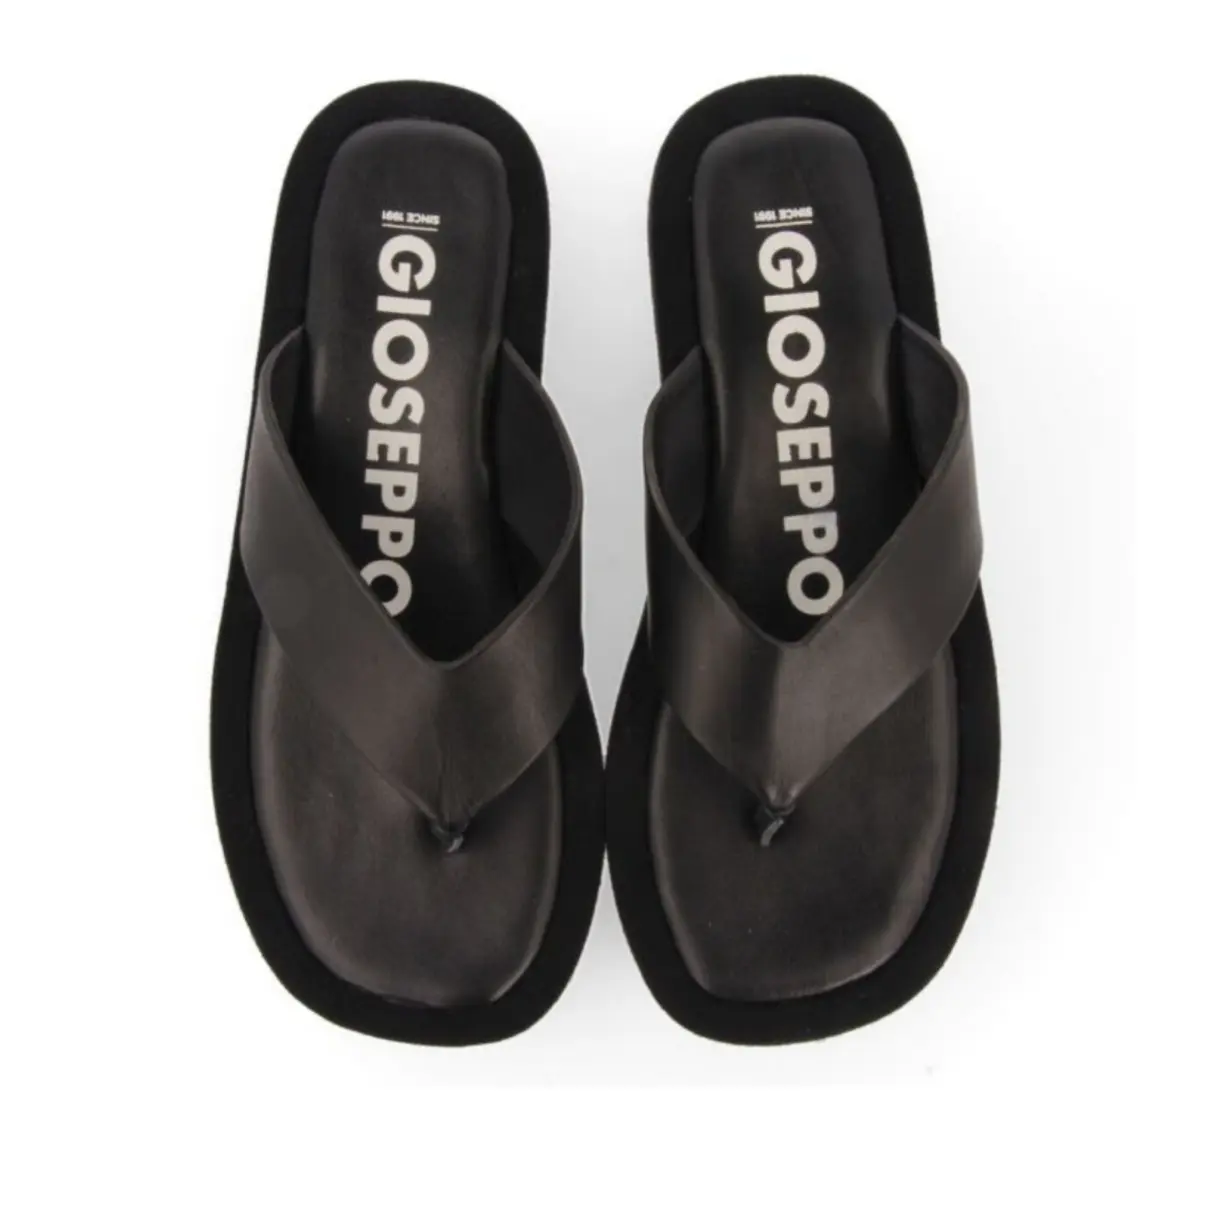 Buy Gioseppo Leather flip flops online